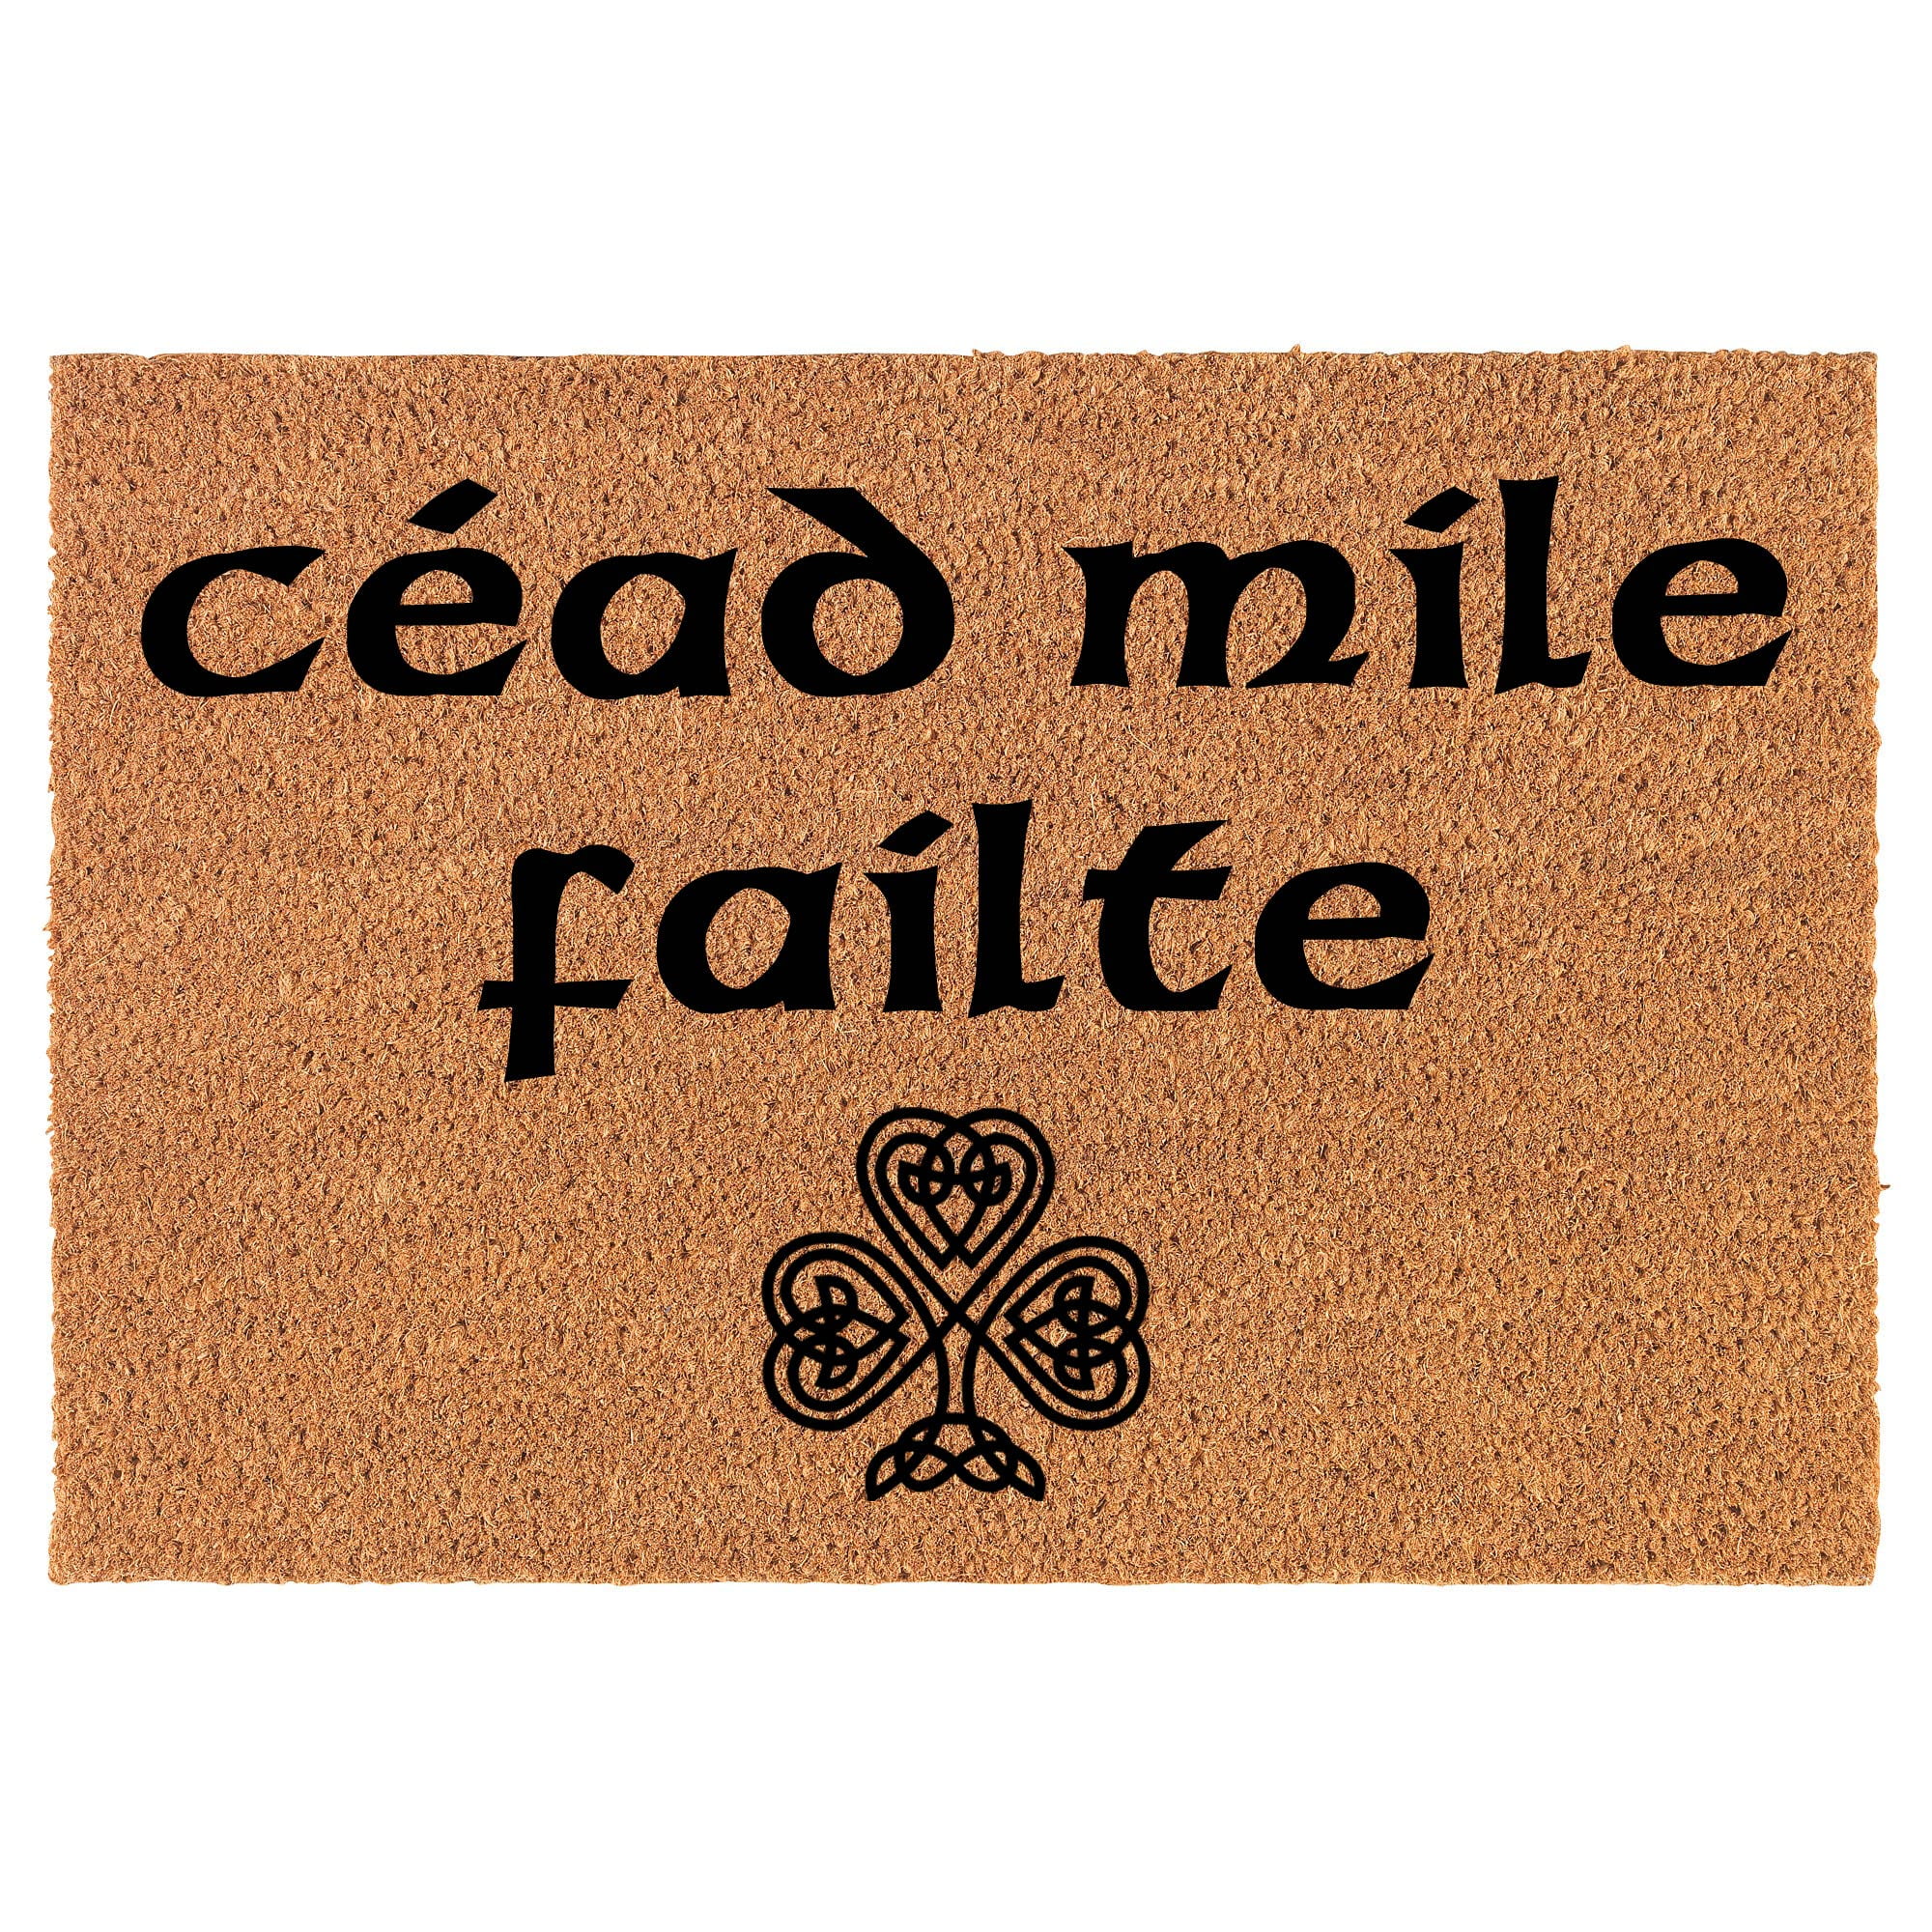 Irish Cead Mile Failte Celtic Gaelic Welcome Doormat Outdoor – Blue Pagan